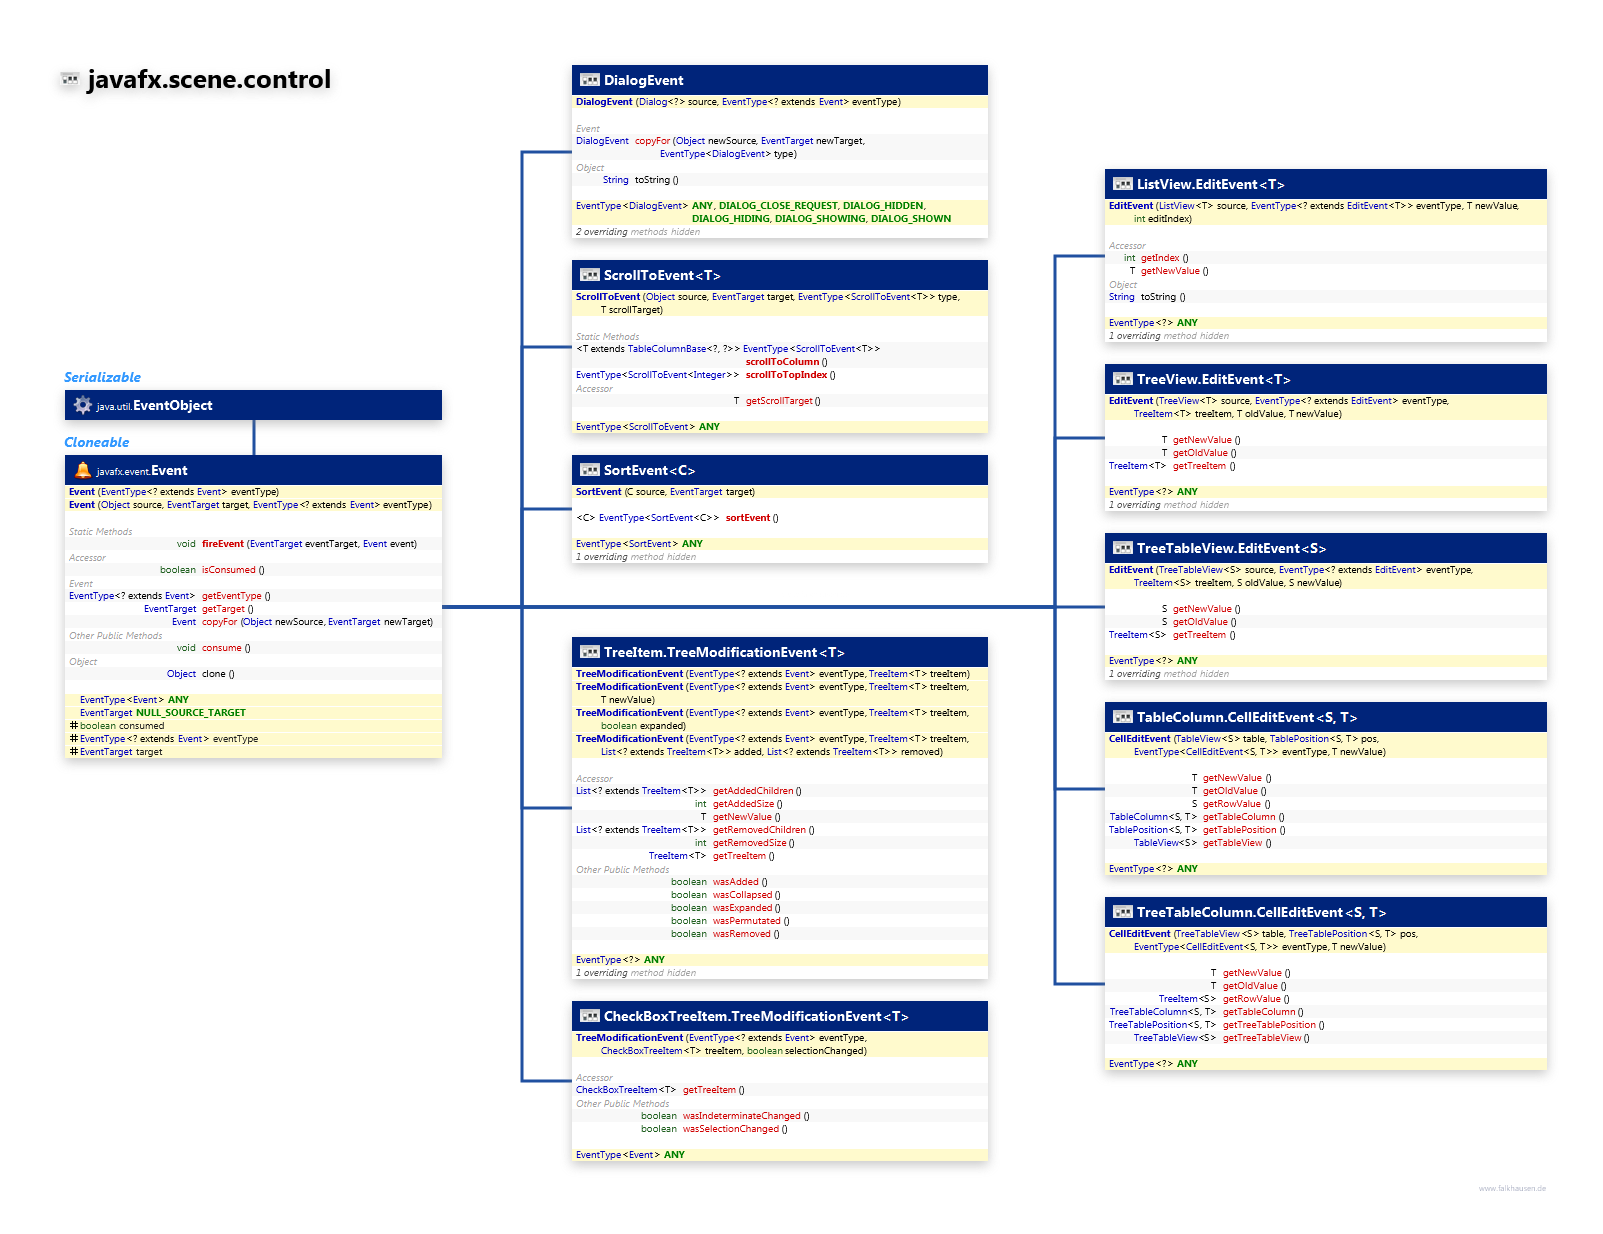 javafx.scene.control Control Event class diagram and api documentation for JavaFX 10